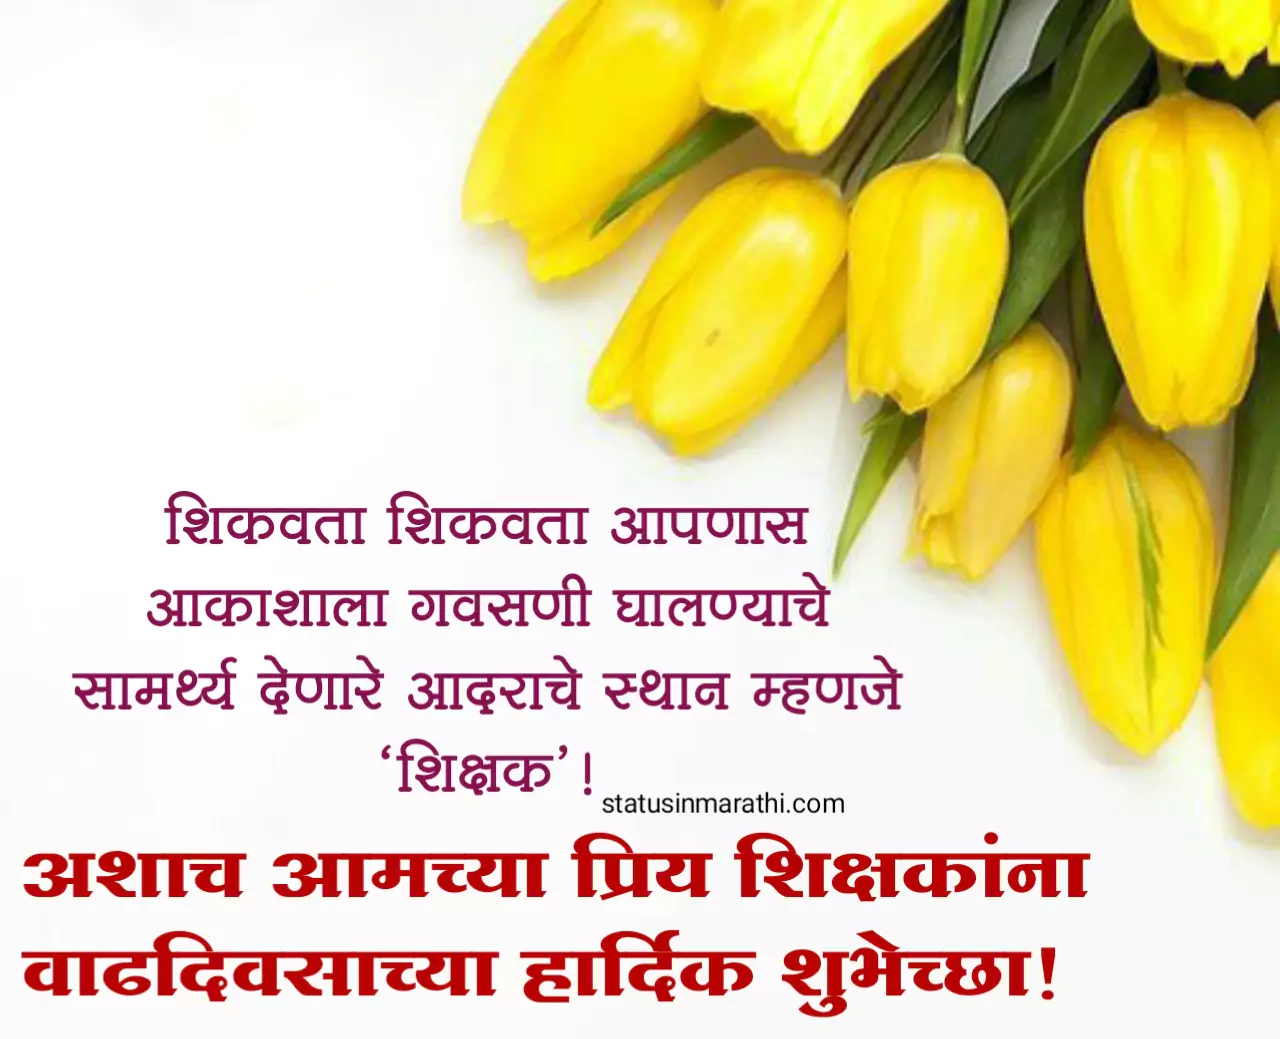 Happy Birthday Image for teacher in marathi